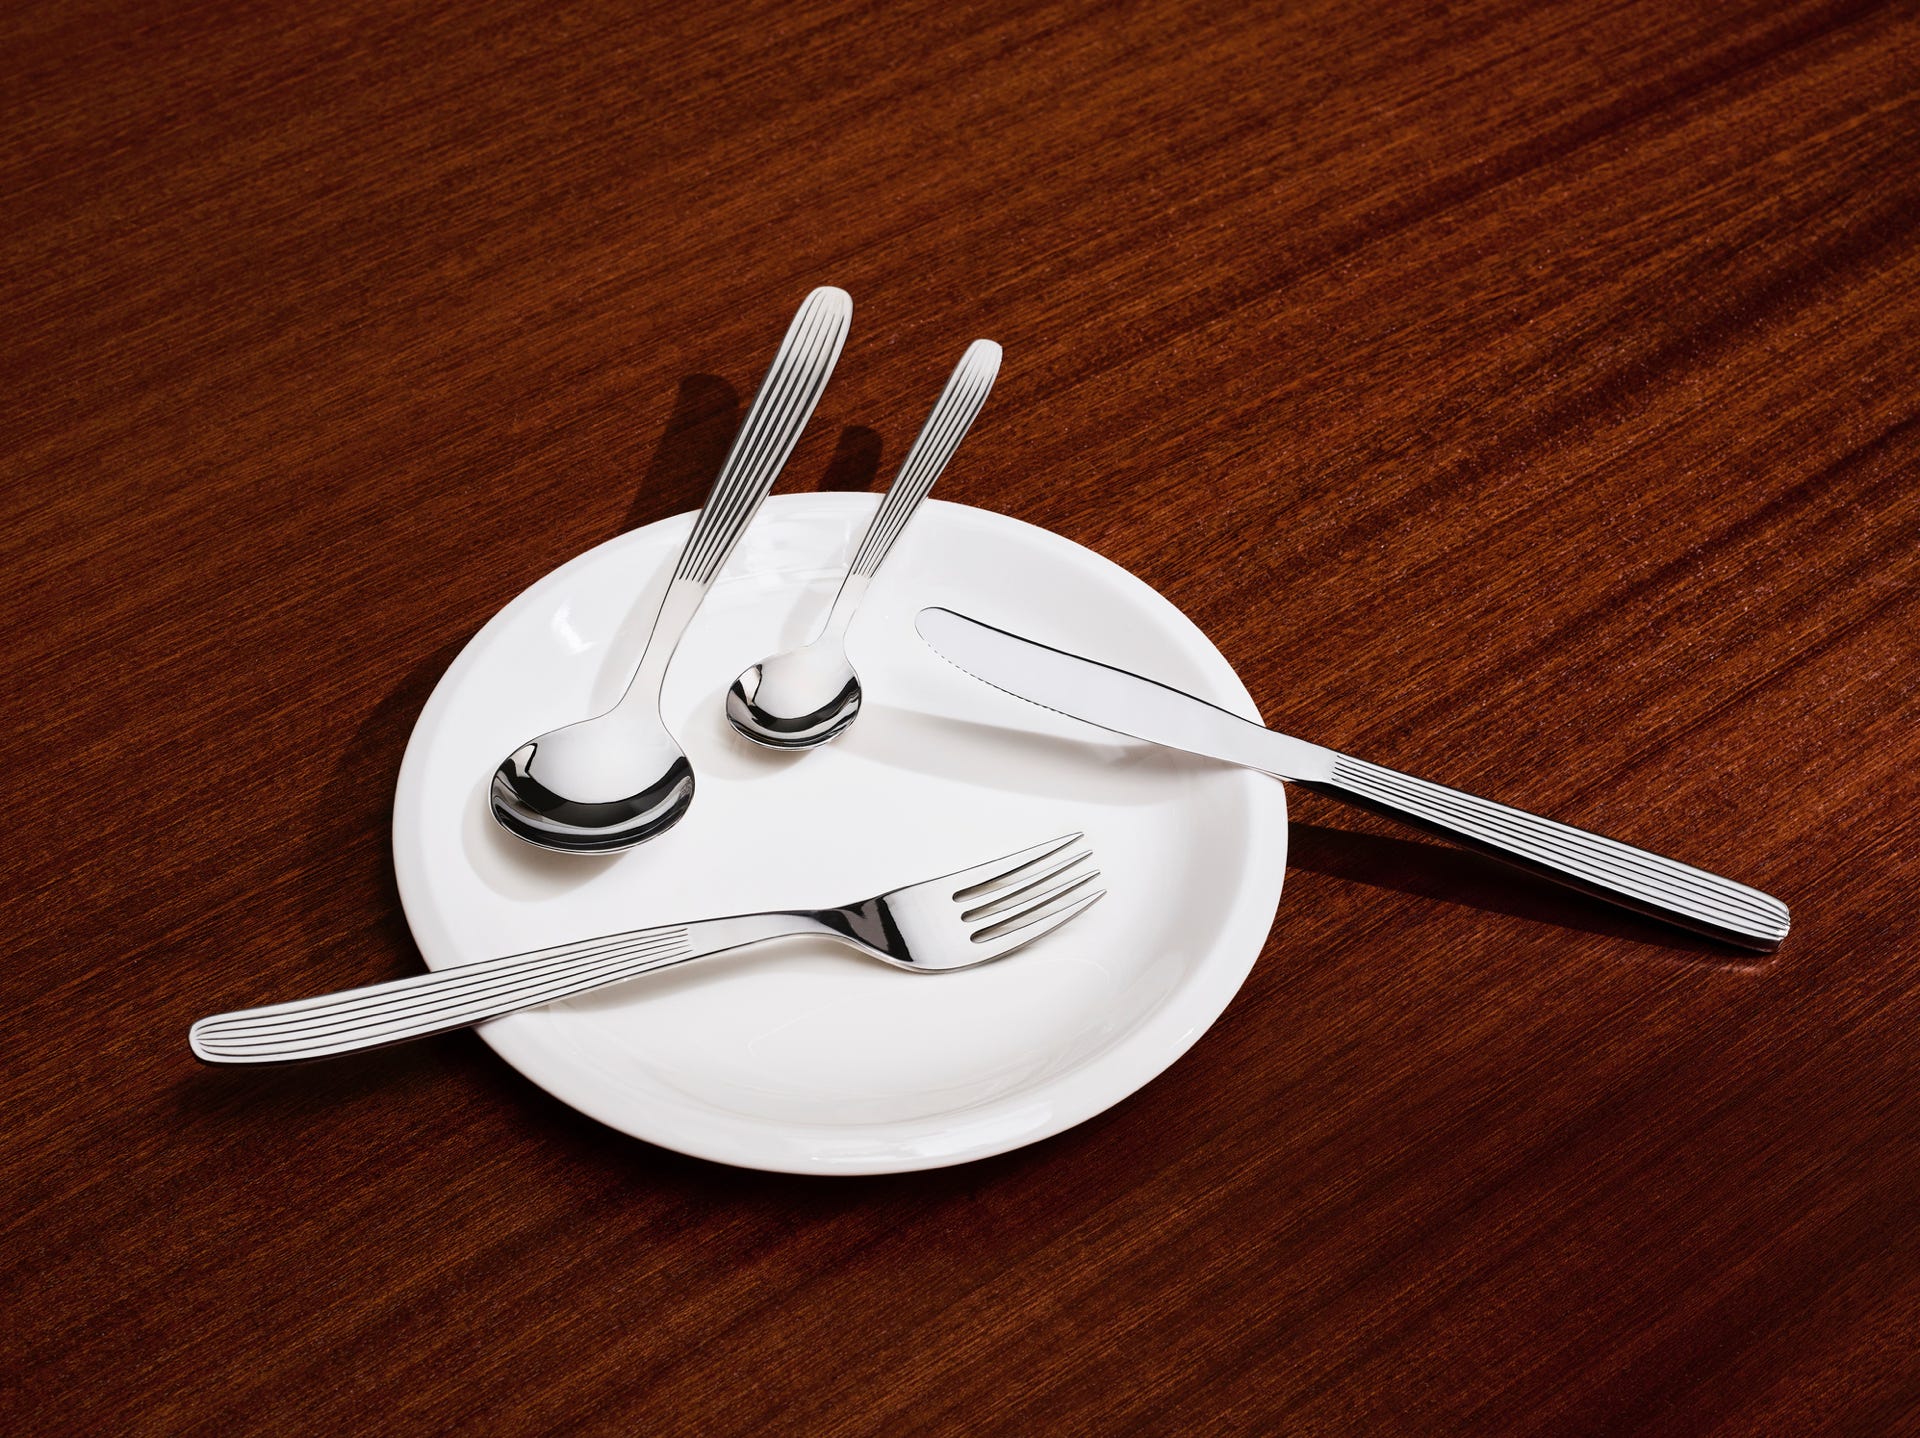 Scandia cutlery design Kaj Franck